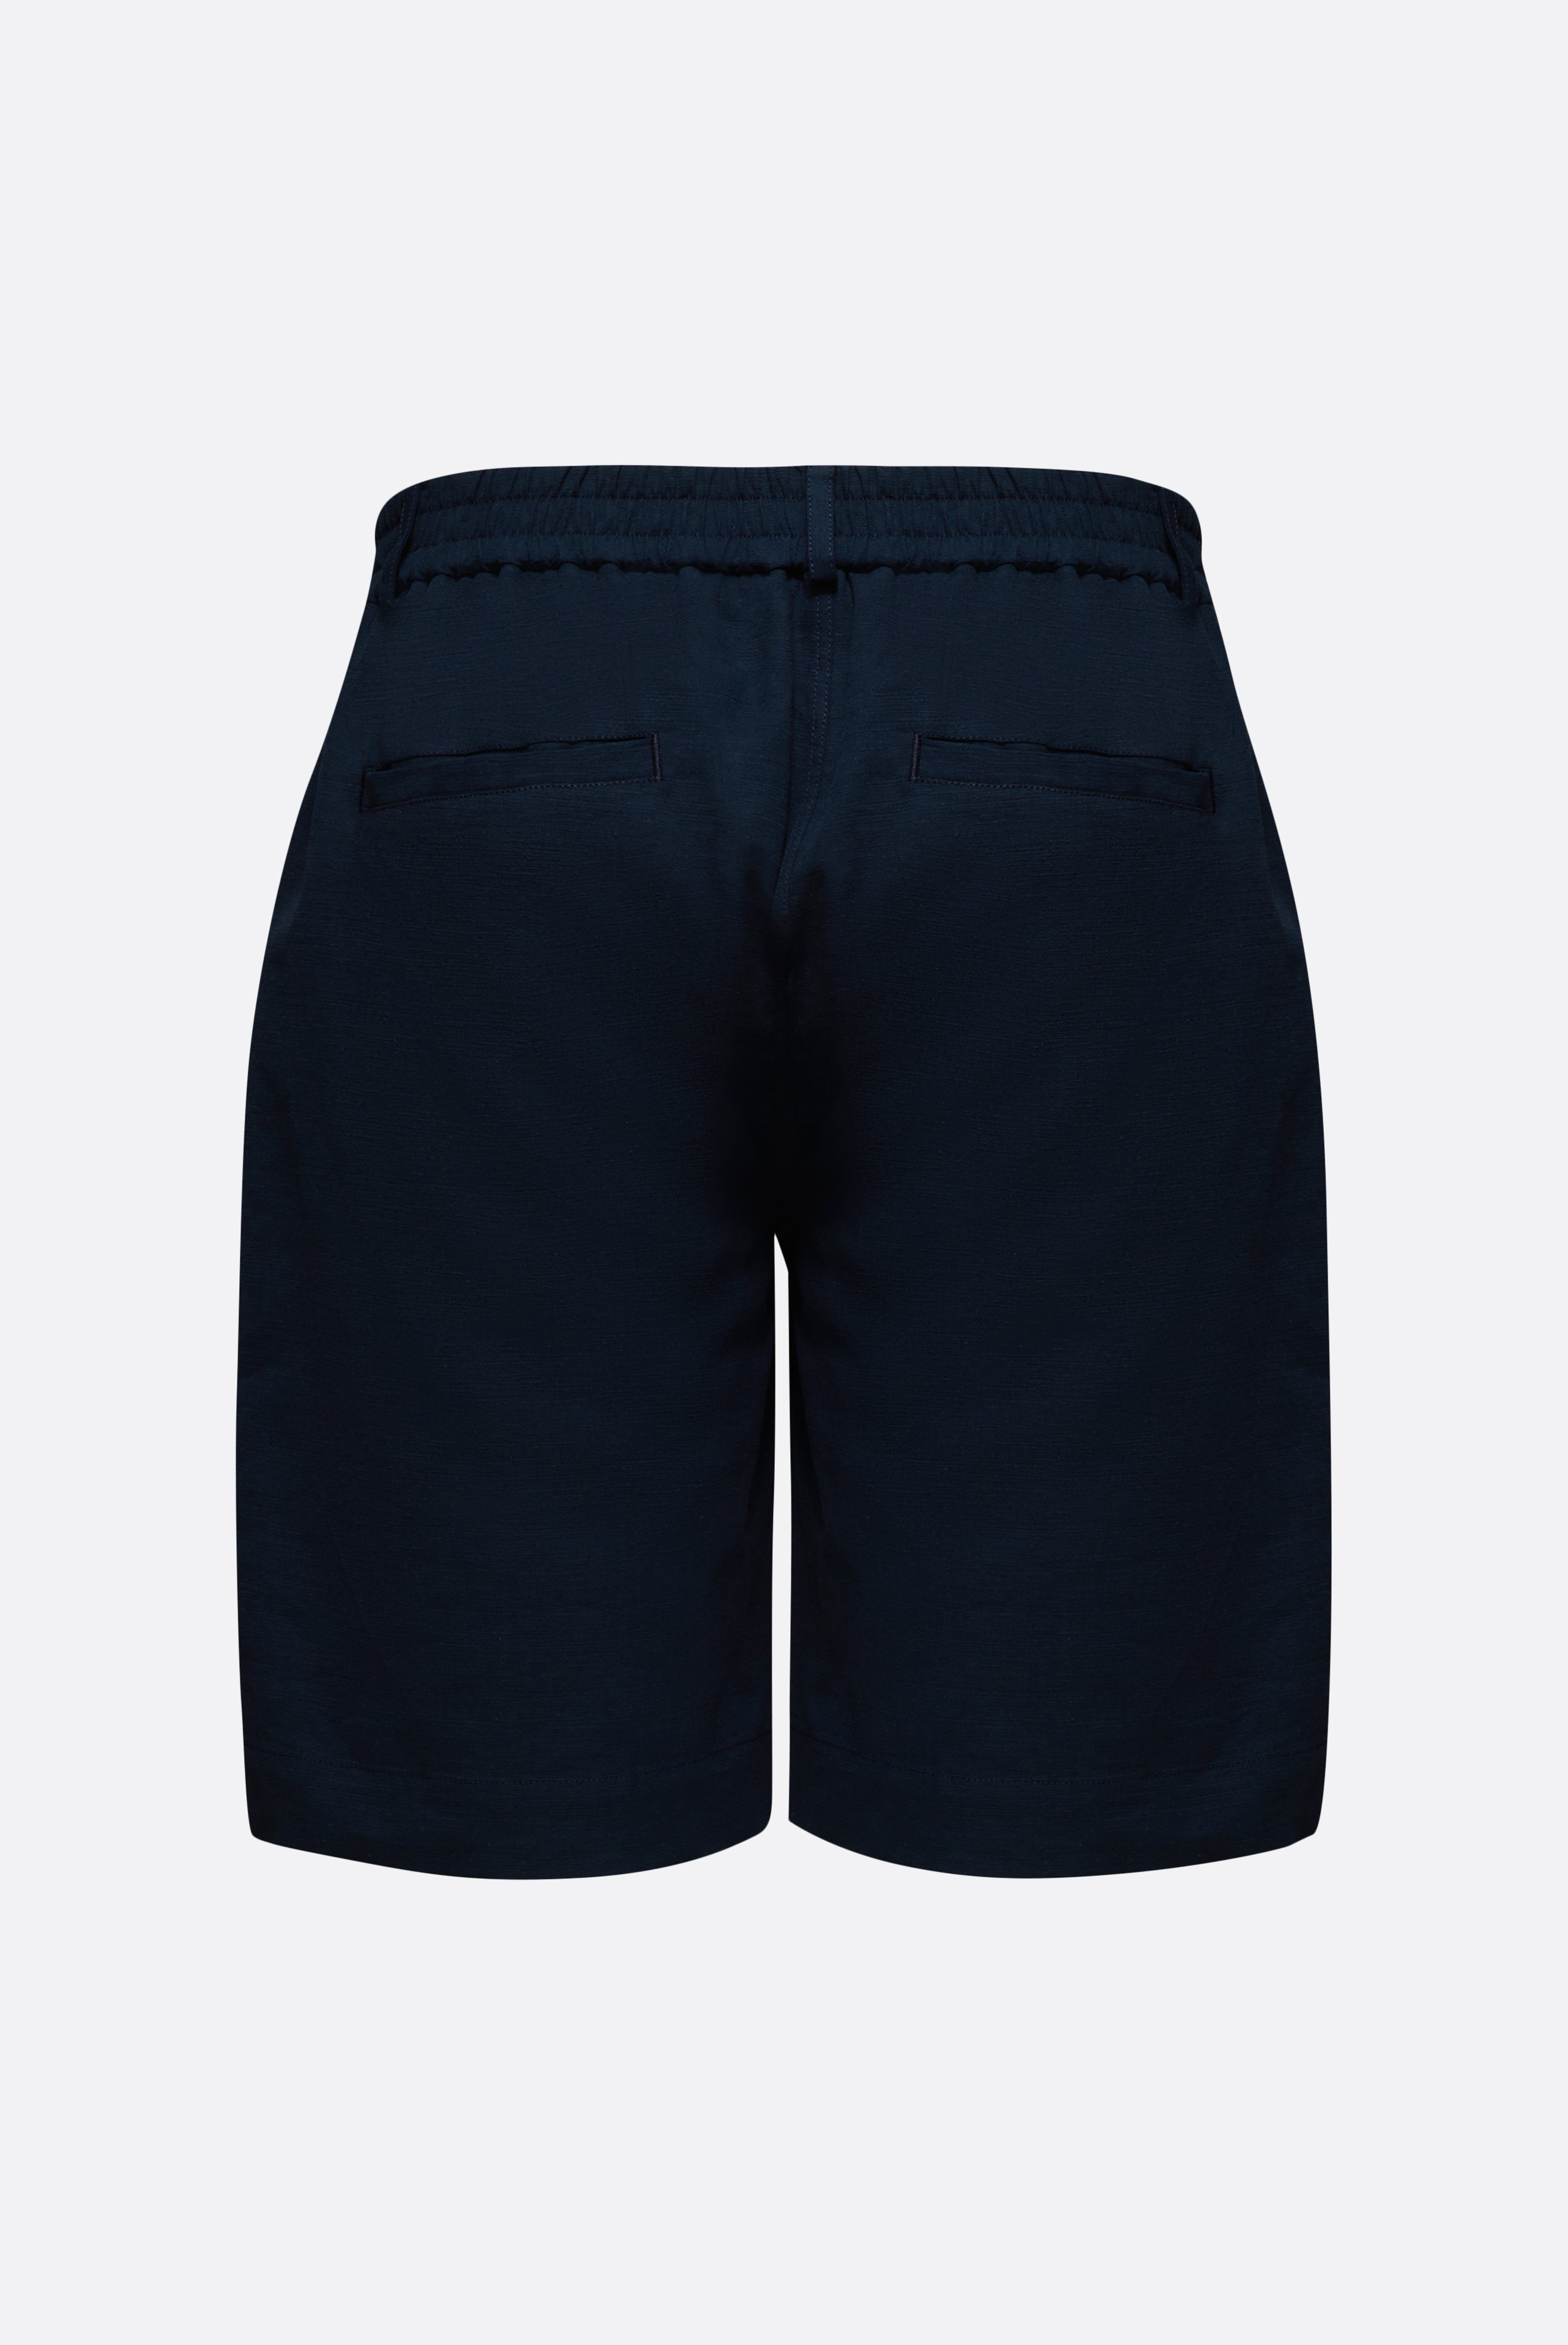 Jeans & Hosen+Shorts mit Jacquard-Muster+20.1218.S2.150252.790.46